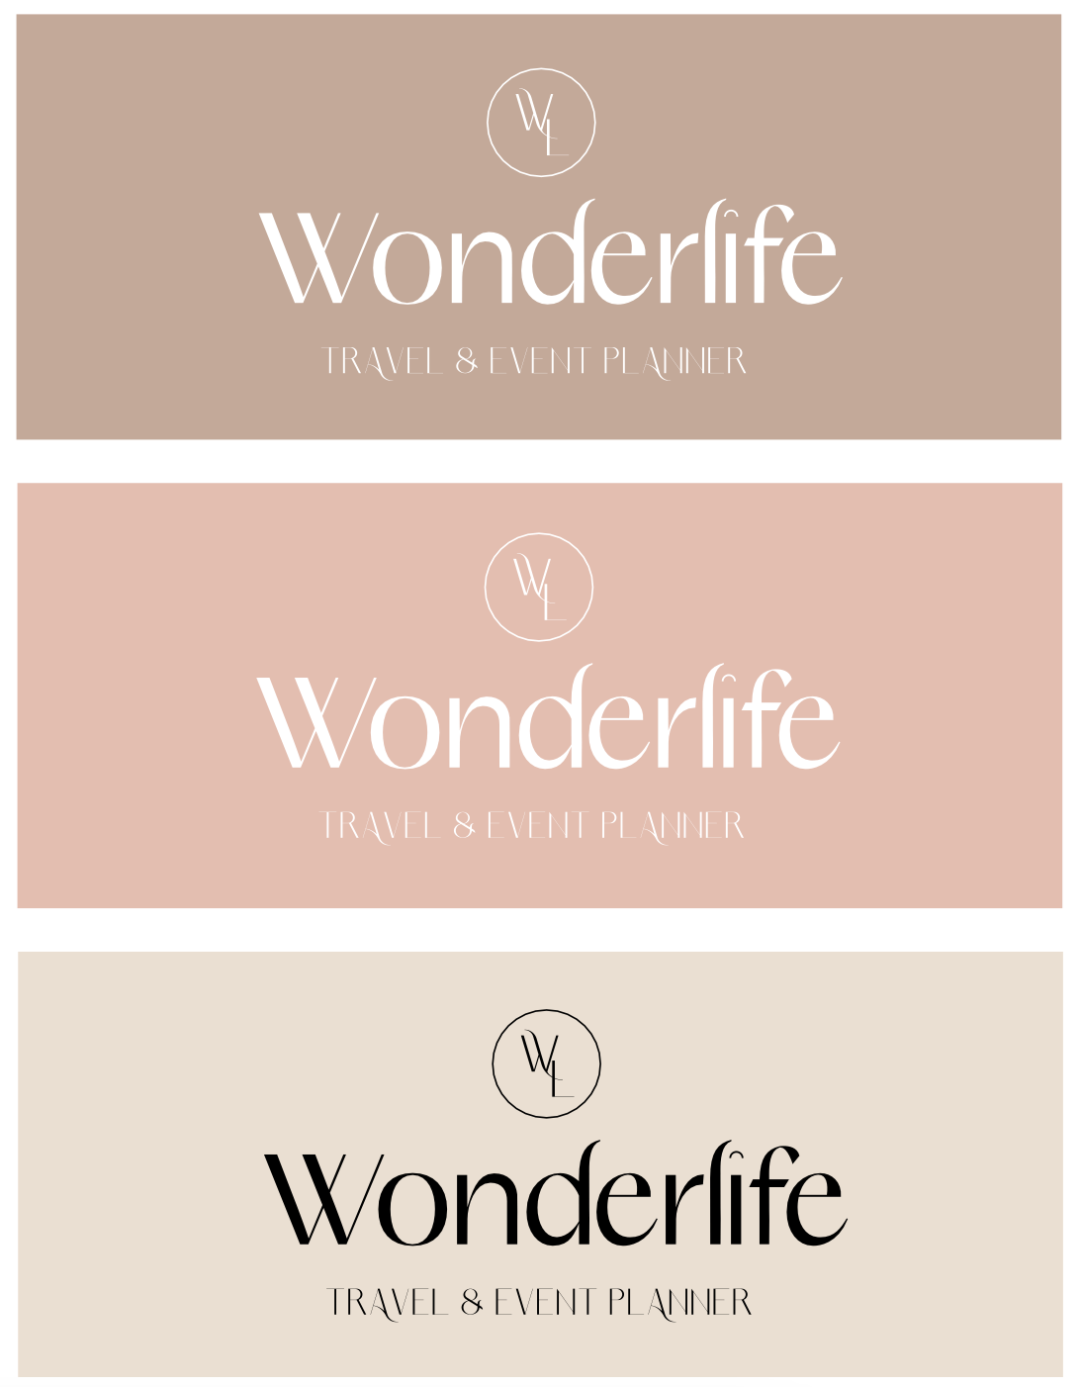 Wonderlife – Travel/Event planner